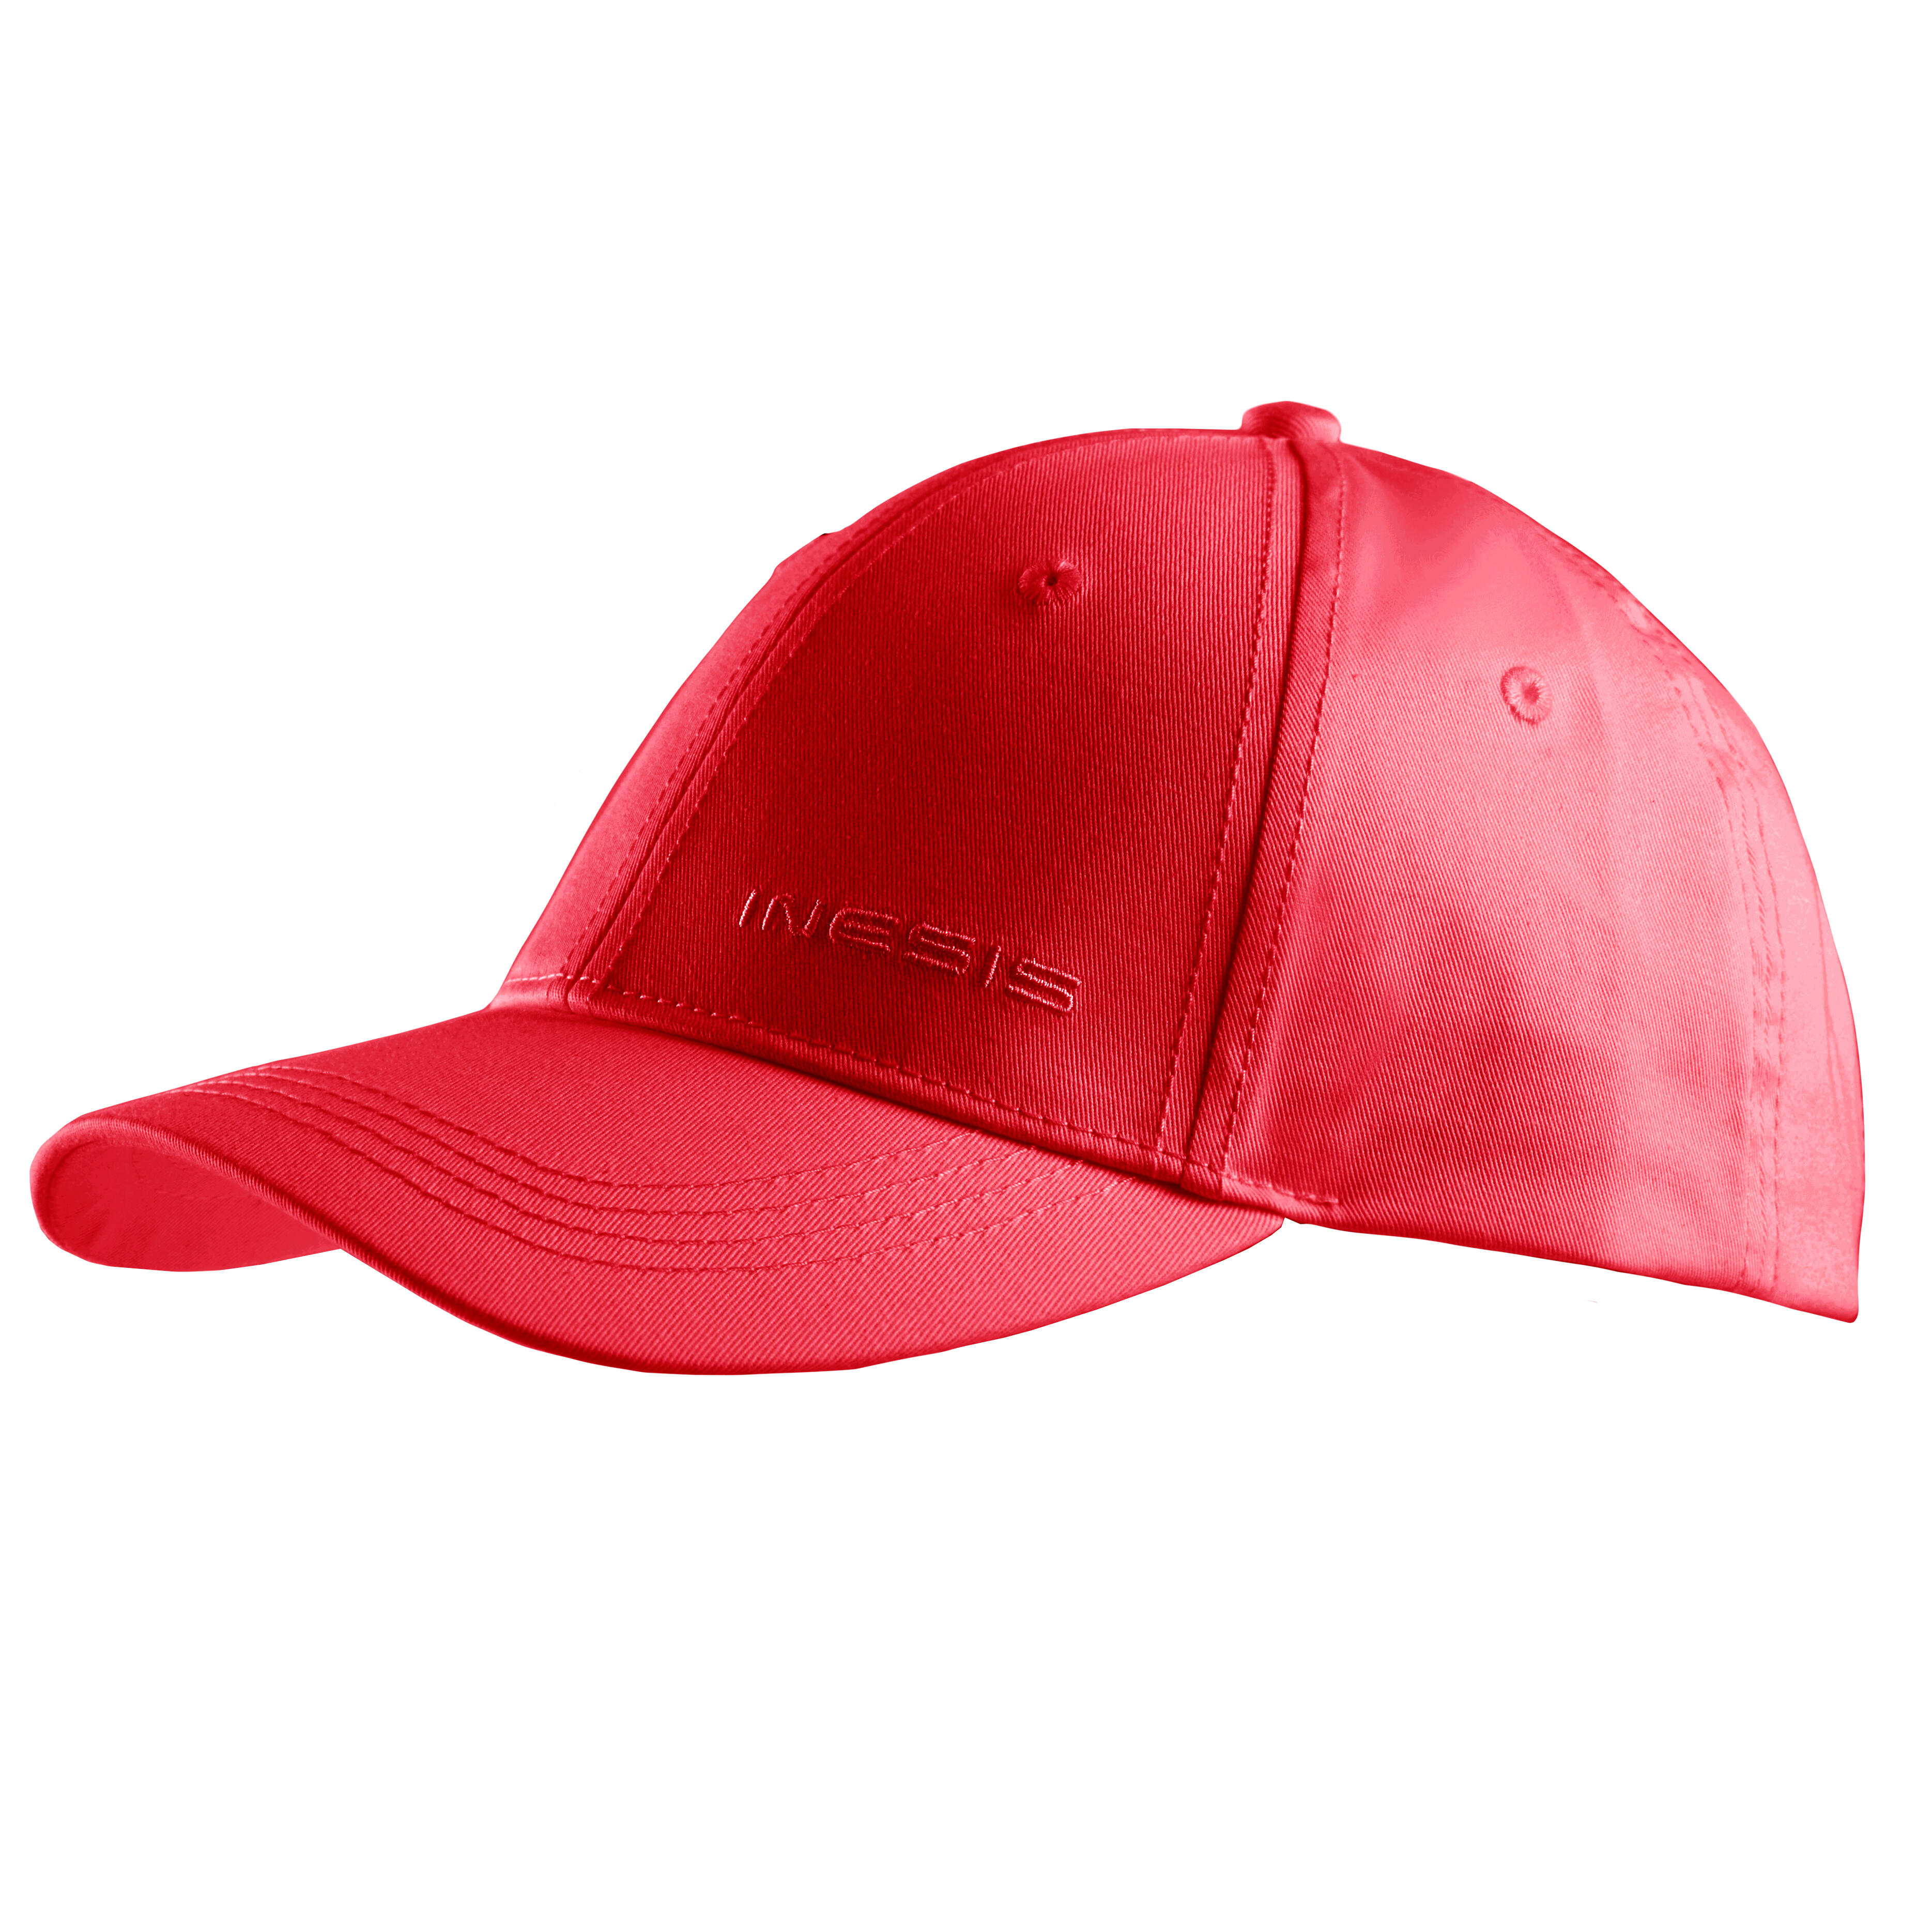 Decathlon | Cappellino golf adulto MW 500 rosso |  Inesis